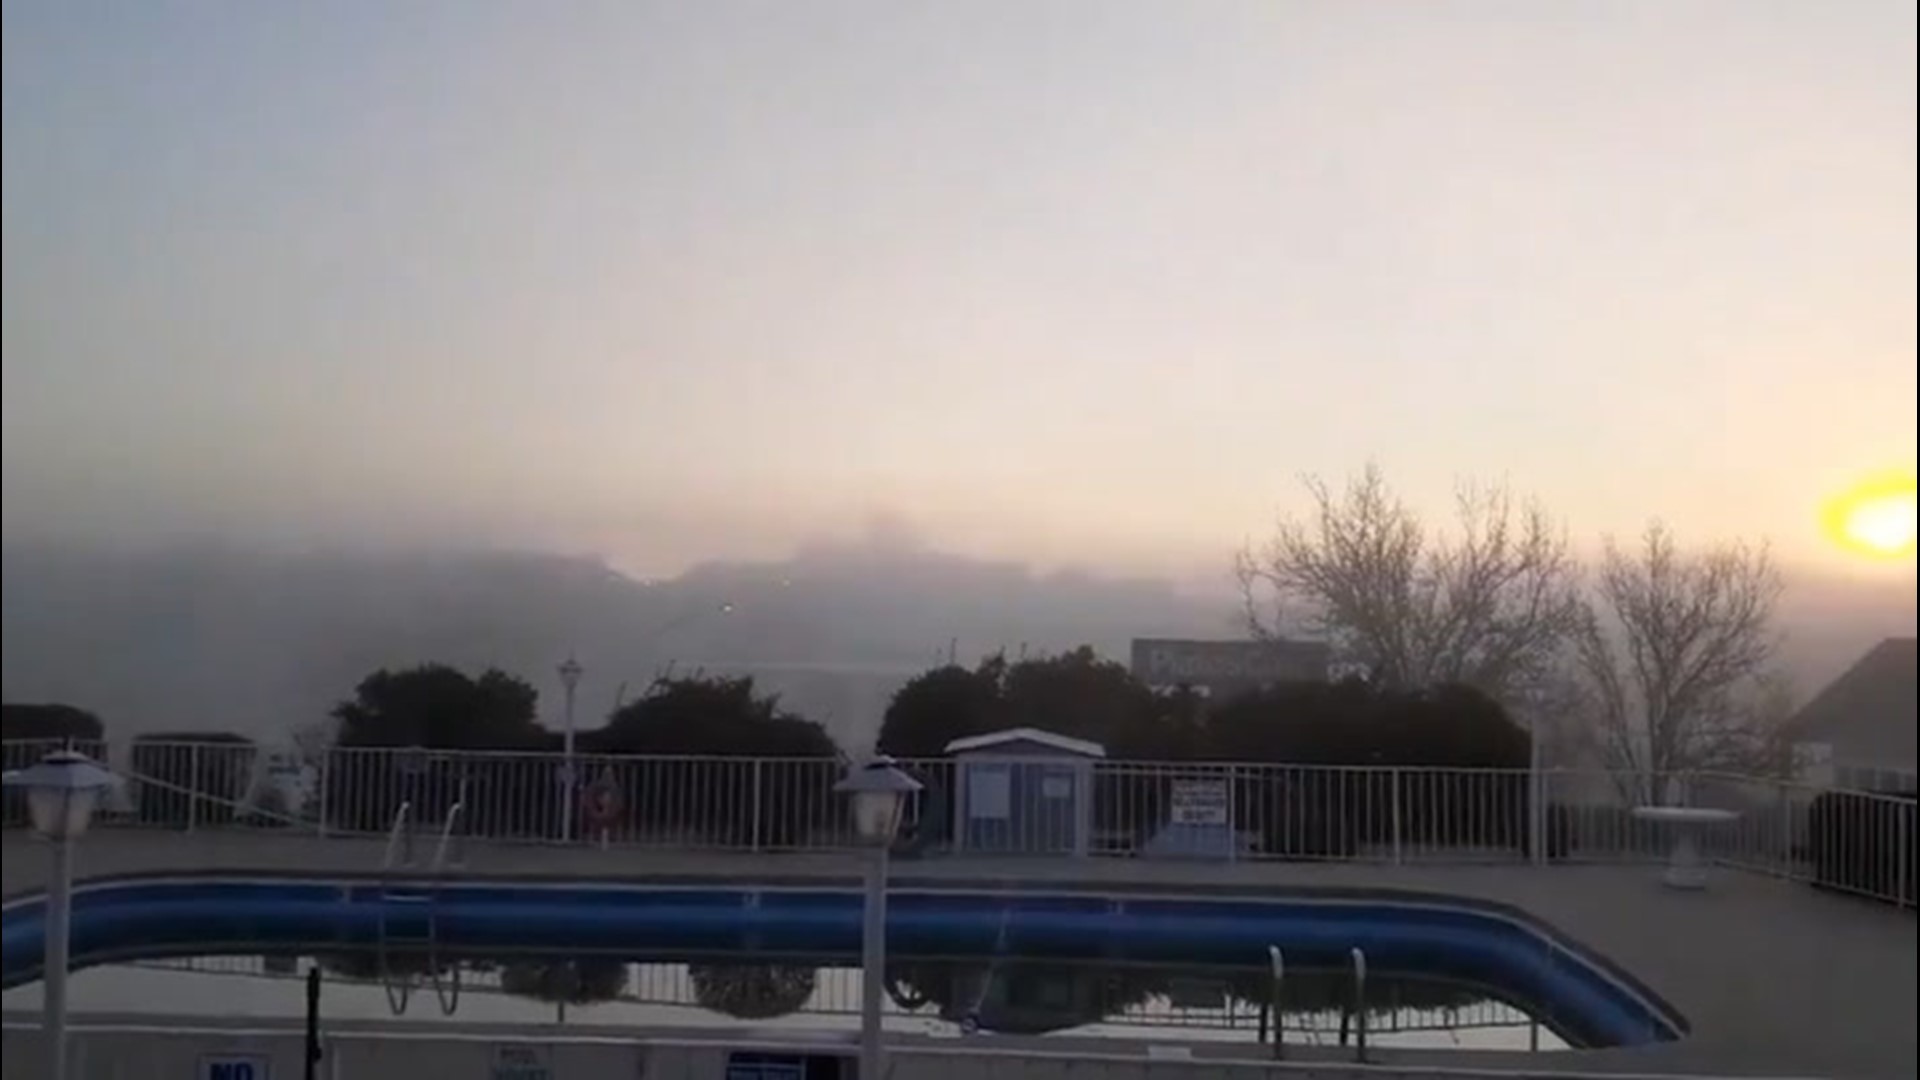 On Saturday, Nov. 28, residents of Branson, Missouri, woke up to heavy fog as the sun rose.